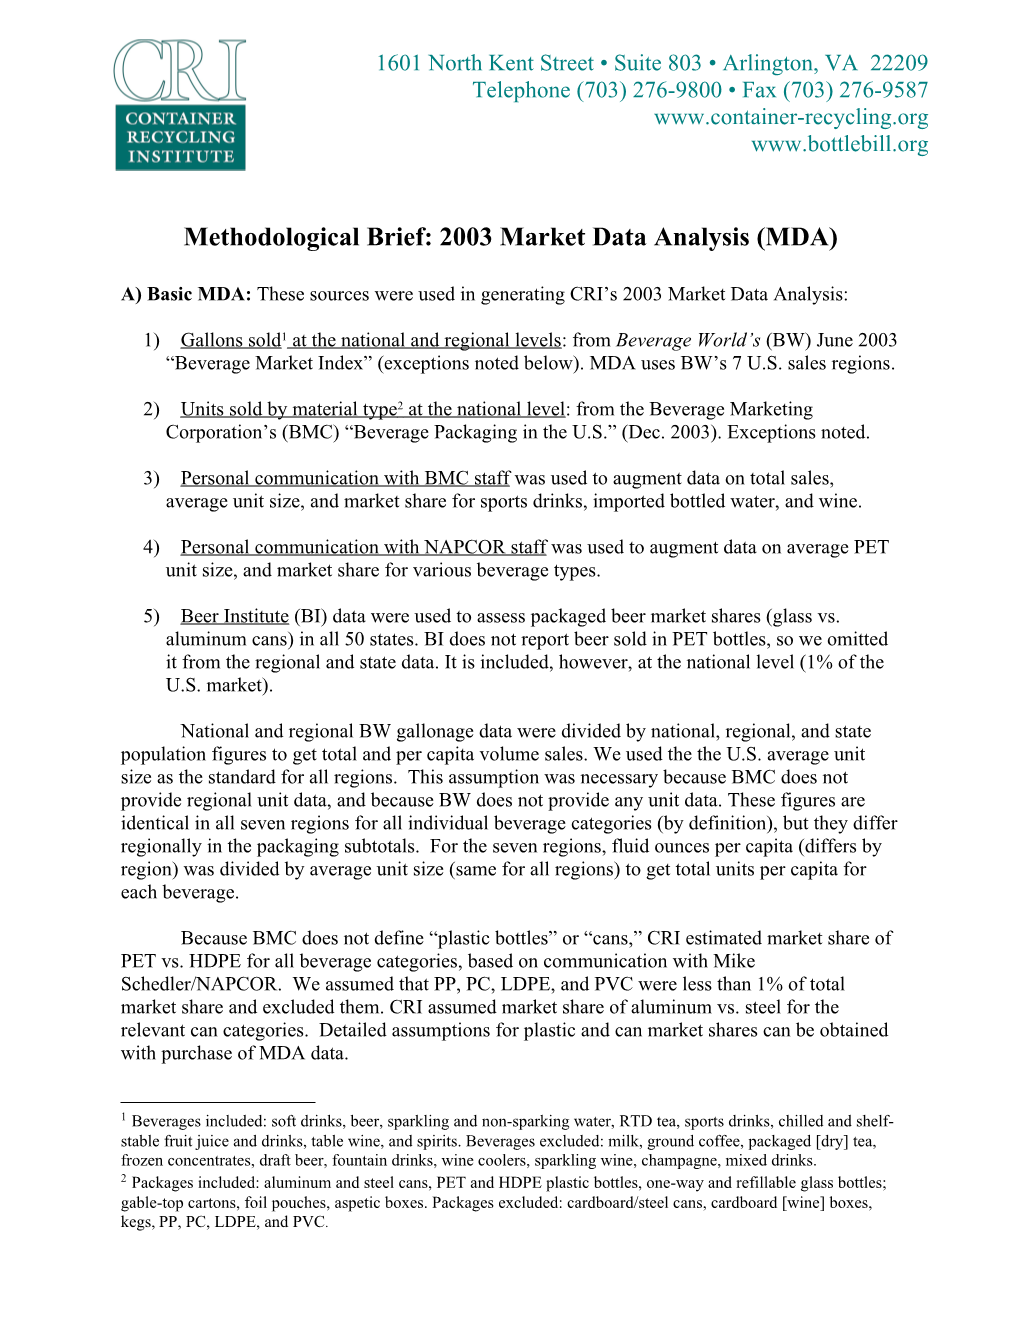 Methodological Brief: 2003 Market Data Analysis (MDA)